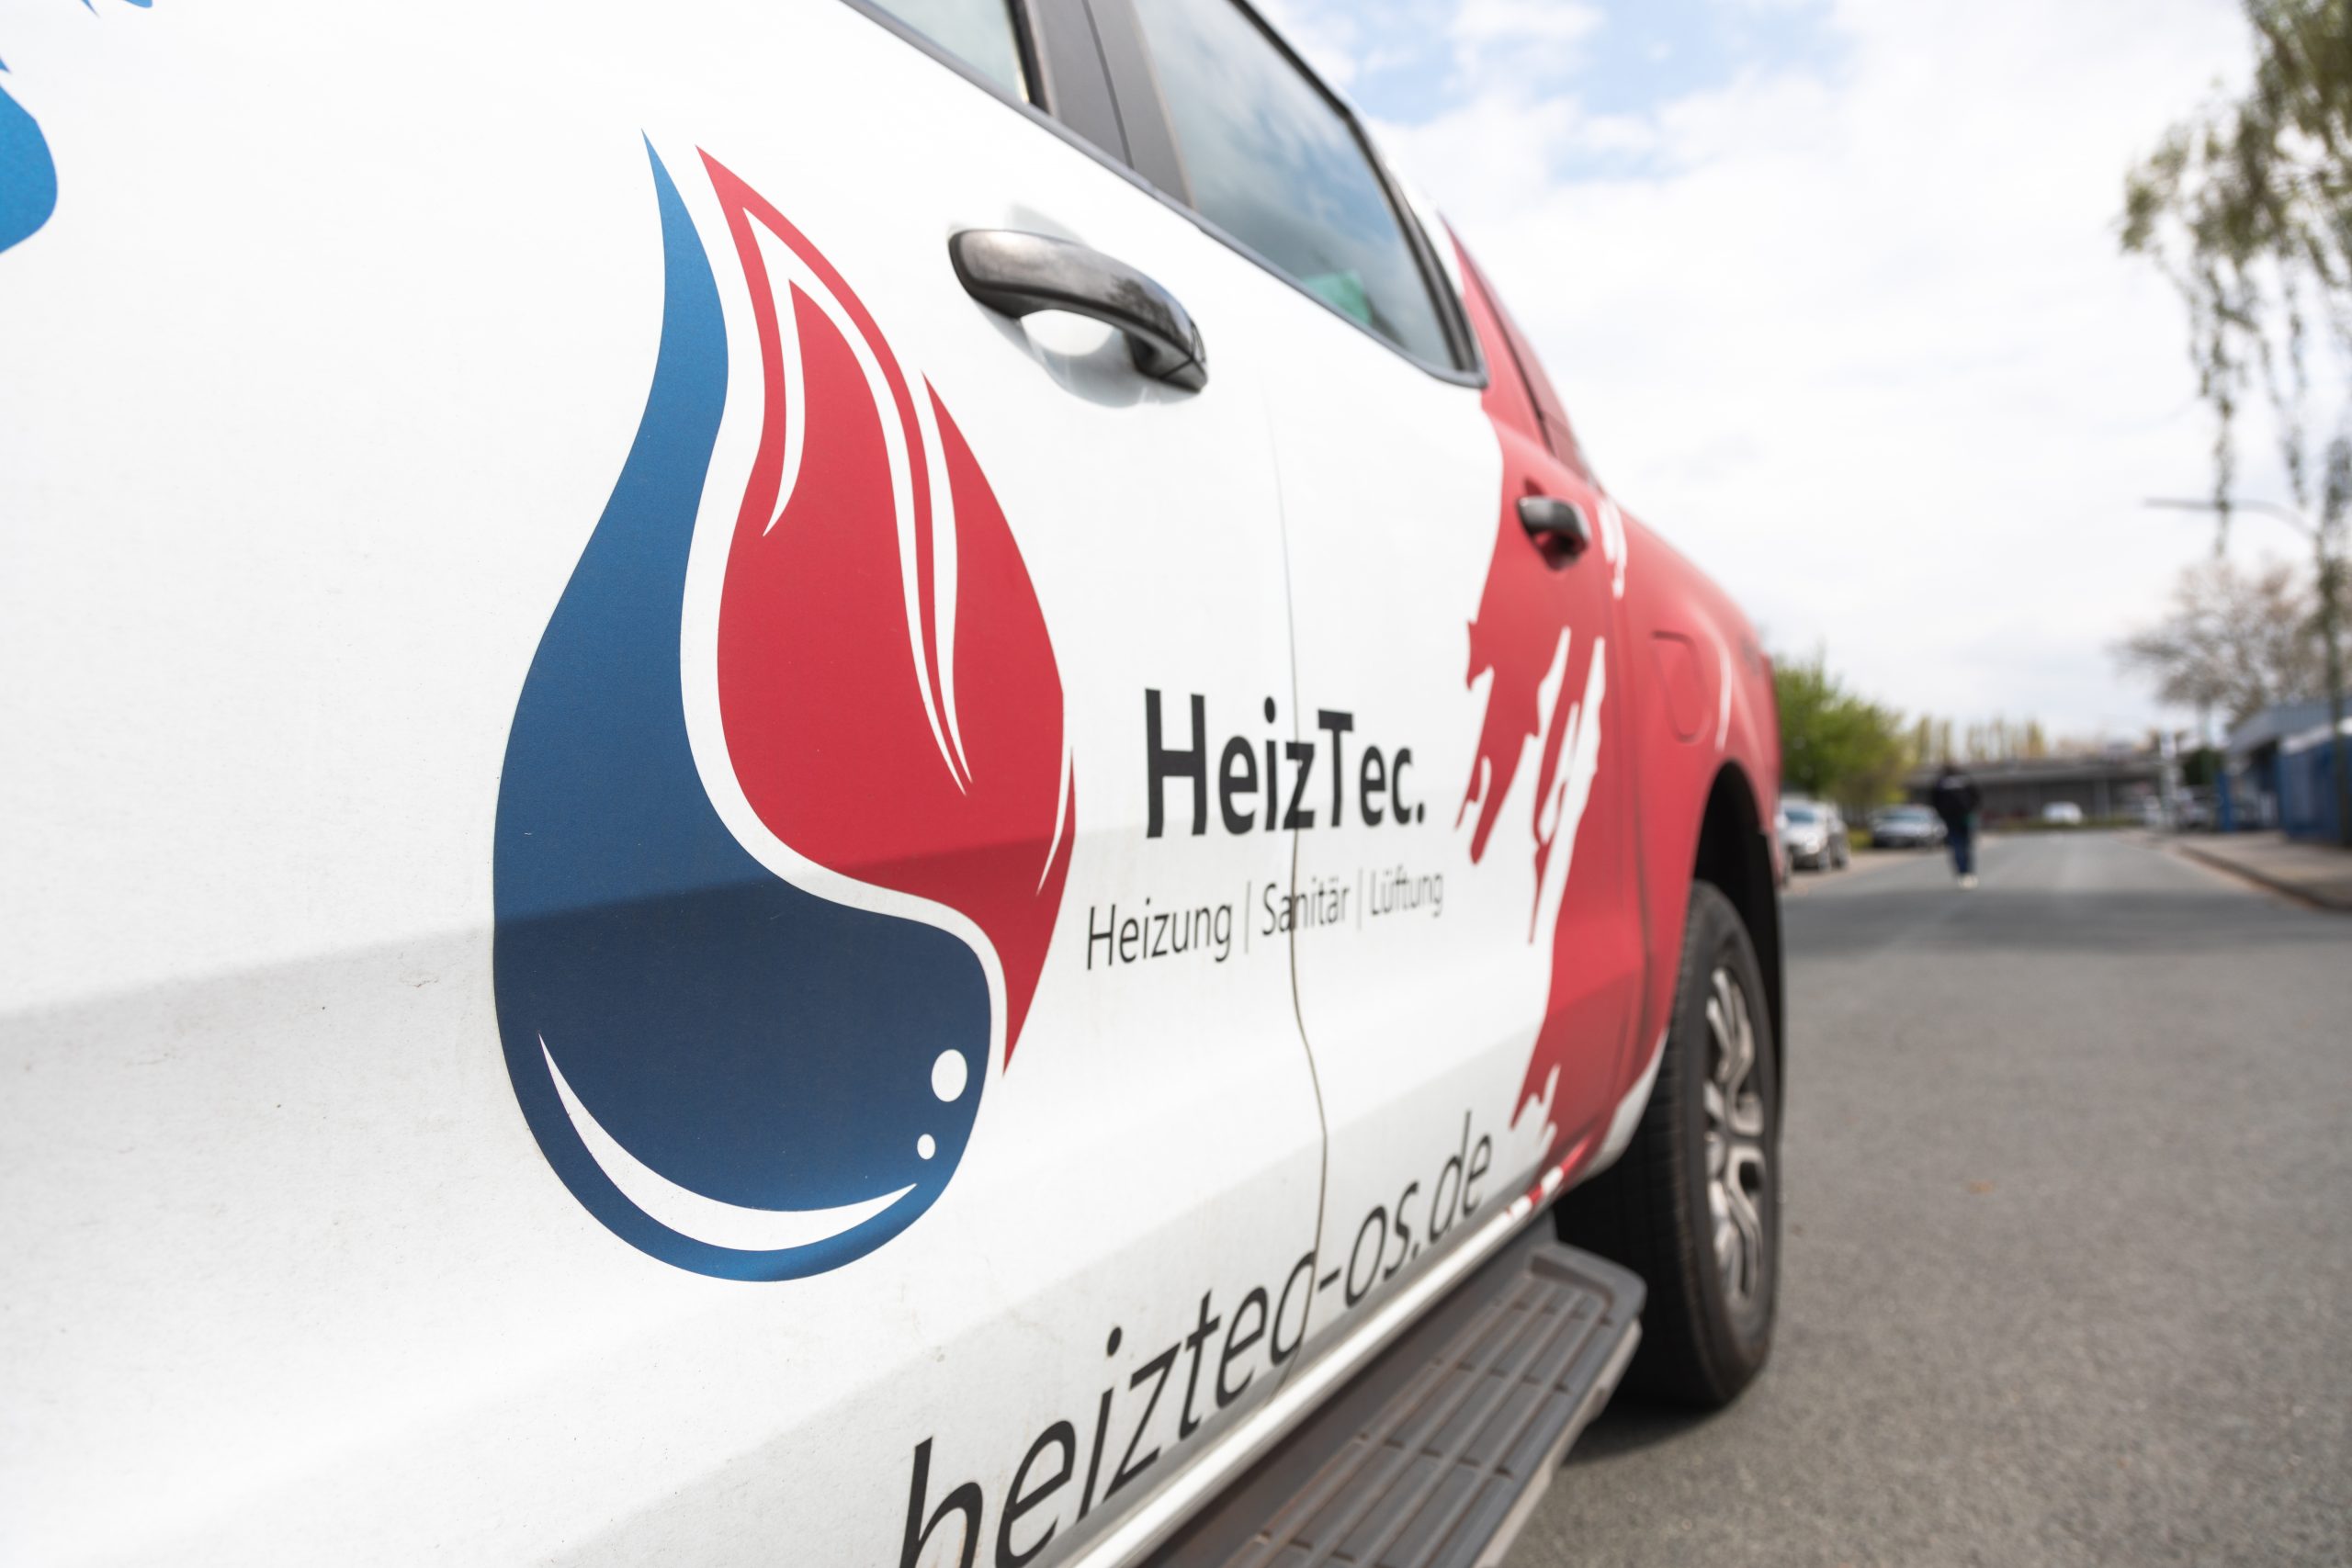 heiztec_car